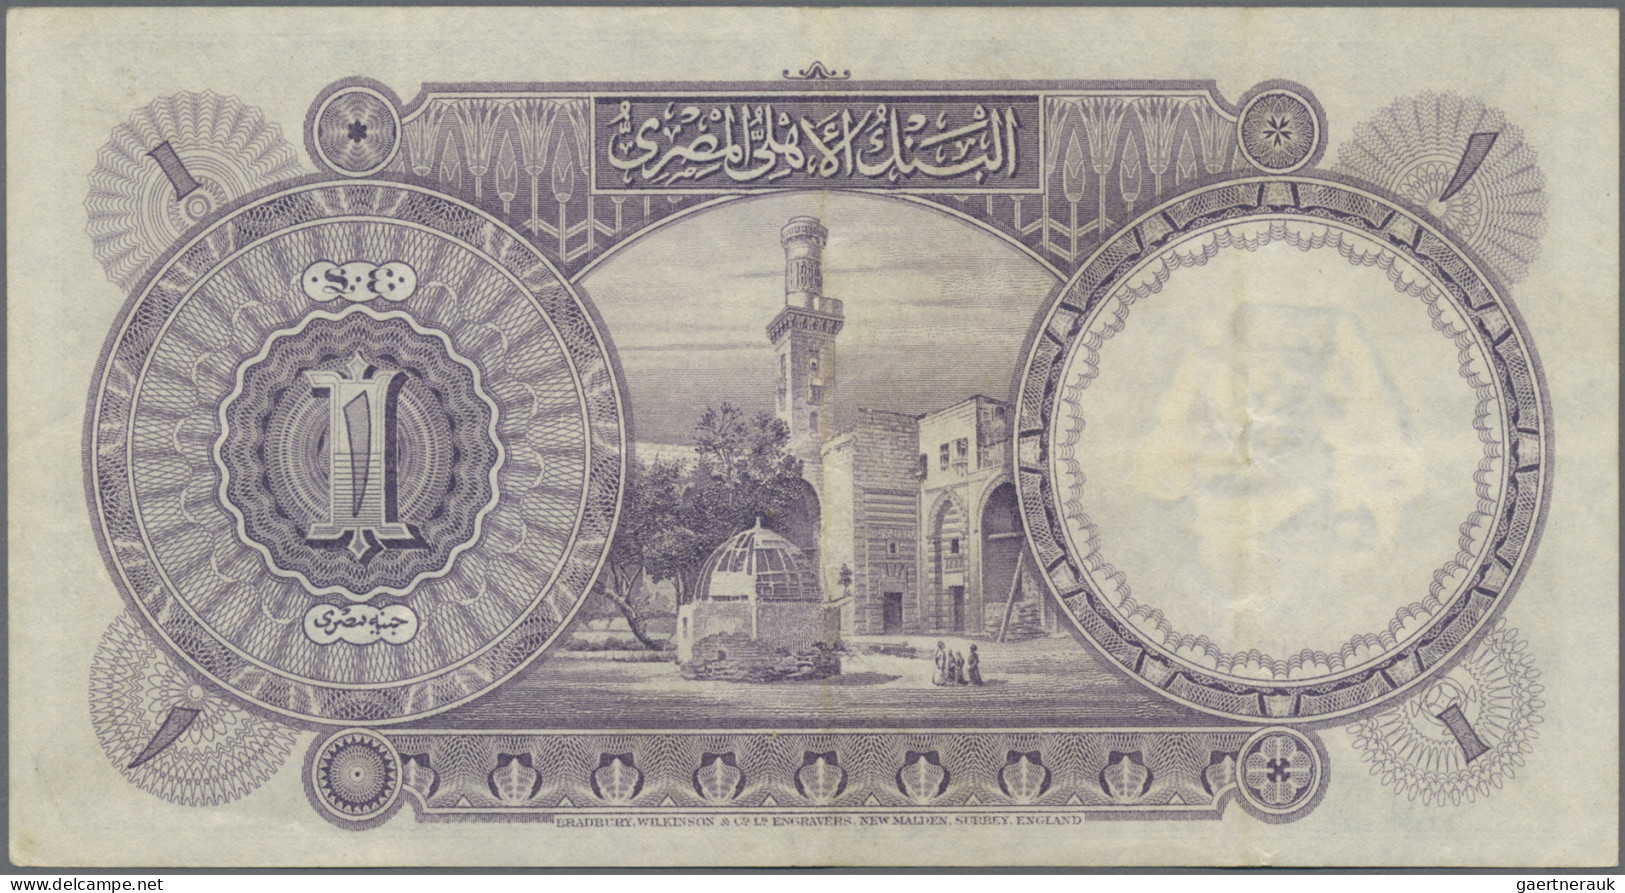 Egypt: National Bank Of Egypt, 1 Pound 4th July 1926, P.20, Very Popular Banknot - Egypte